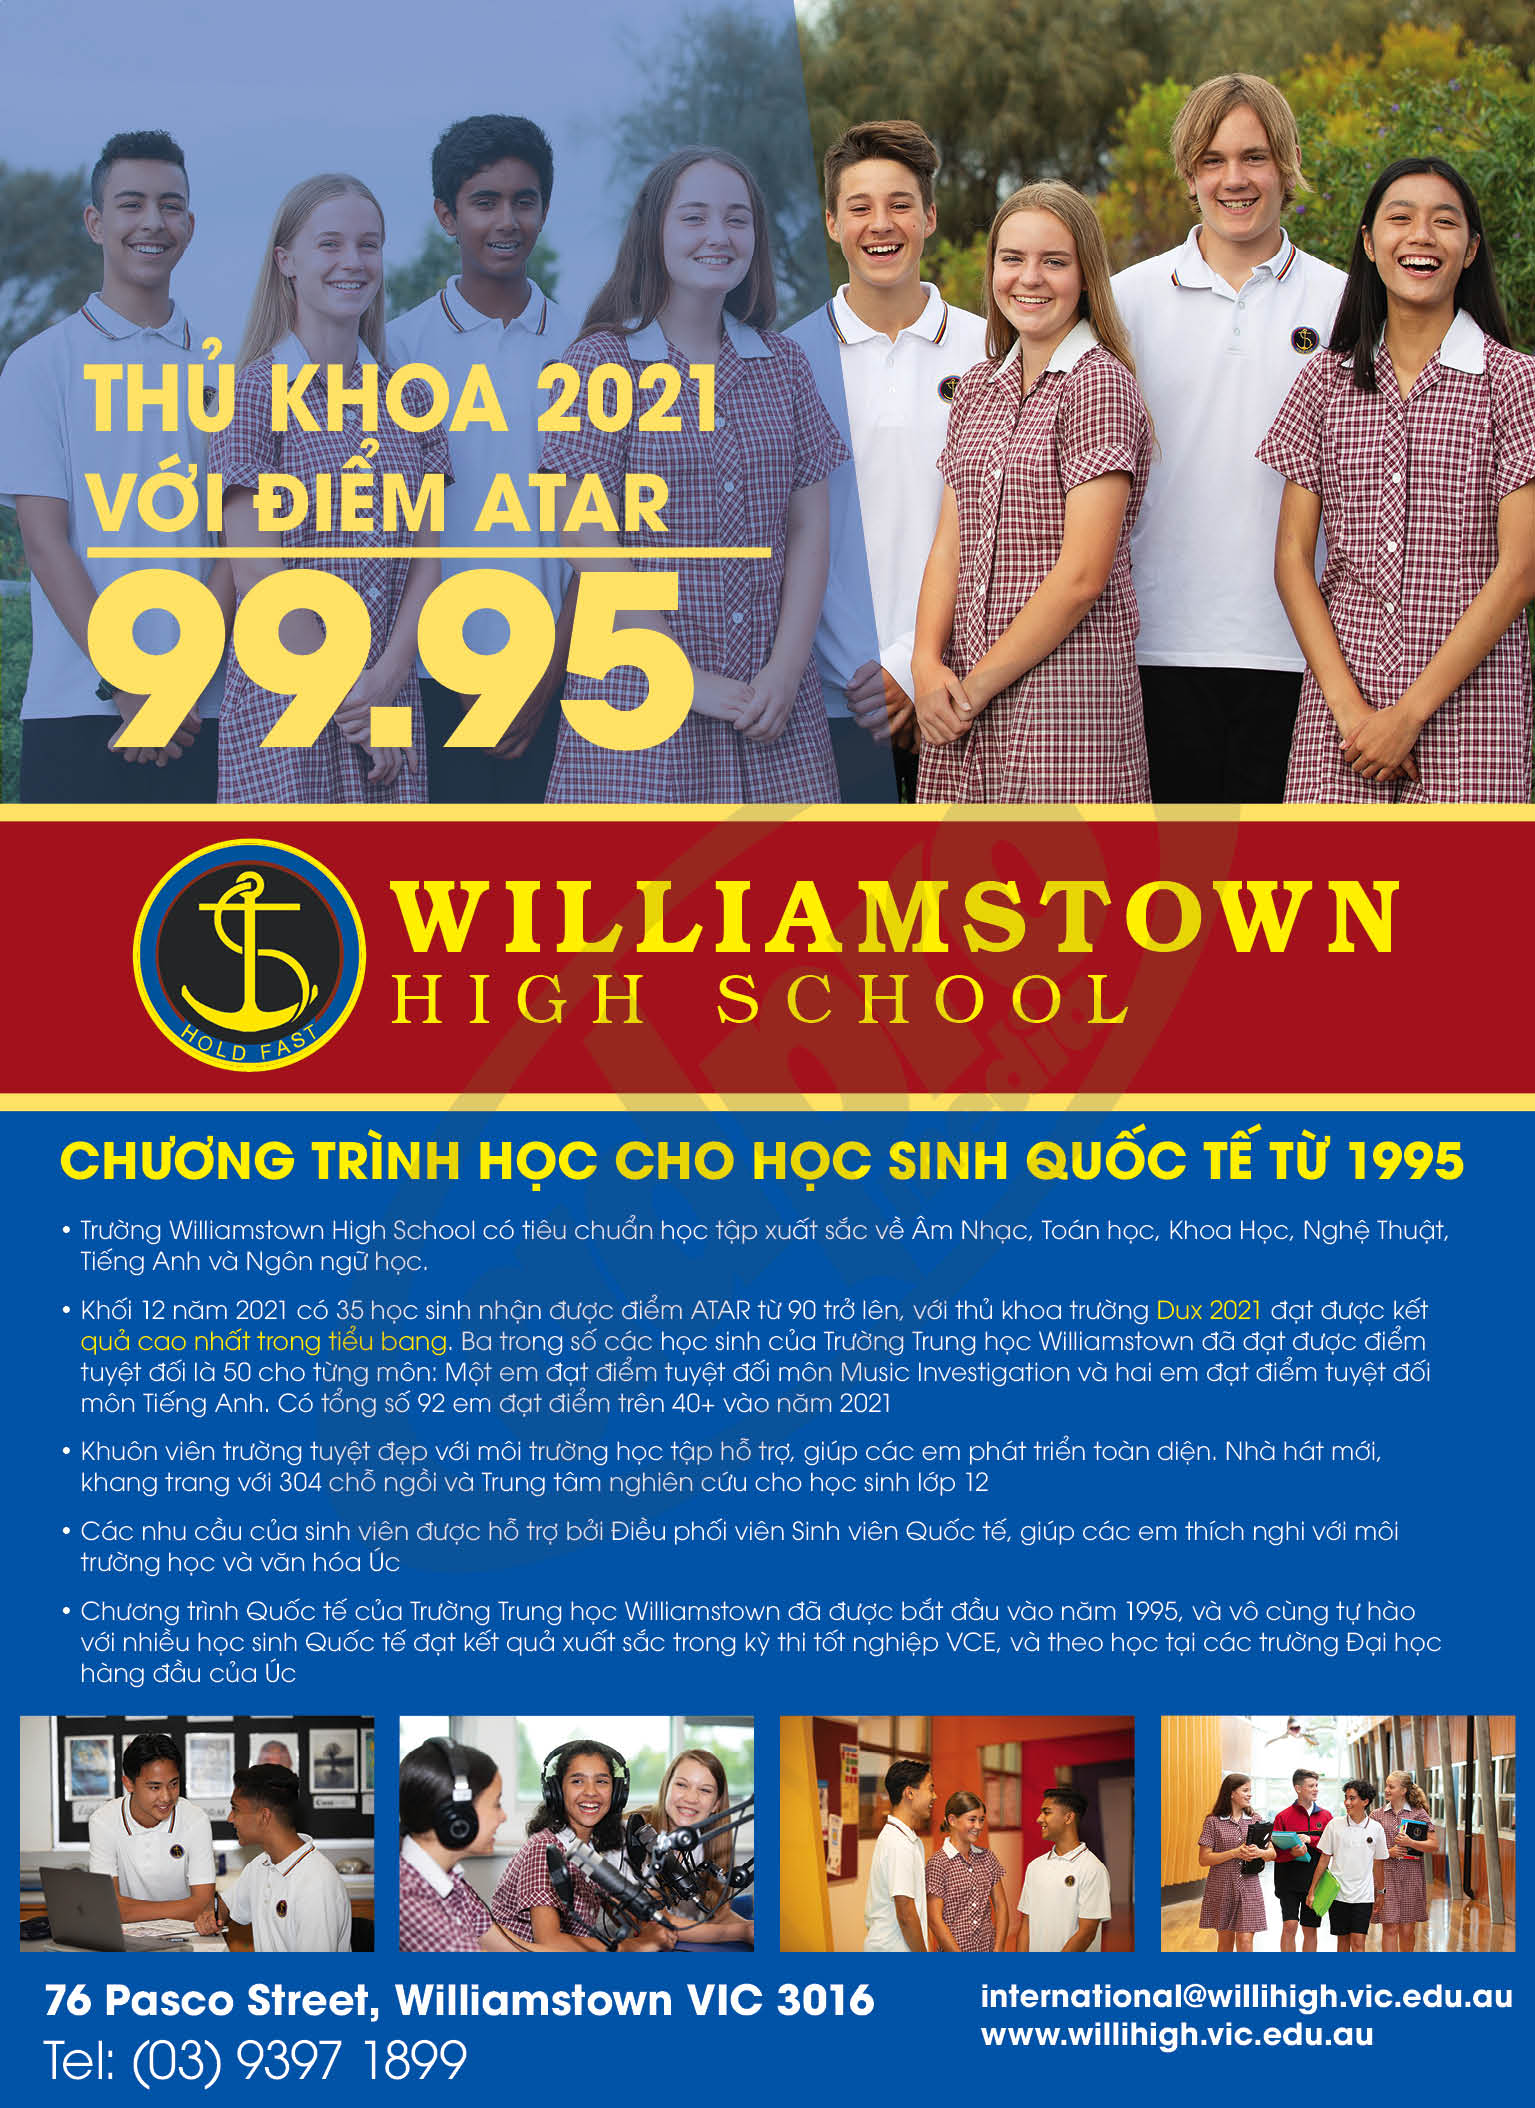 Williamstown High School